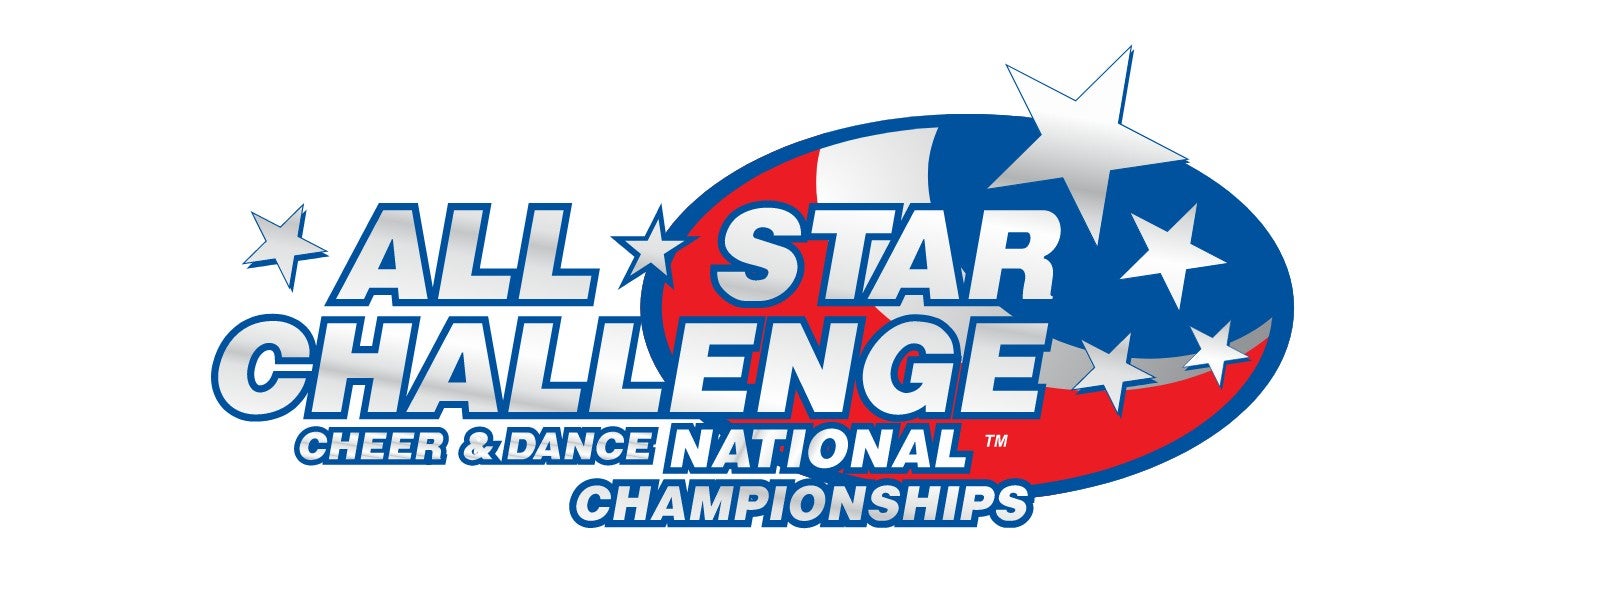  All-Star Challenge